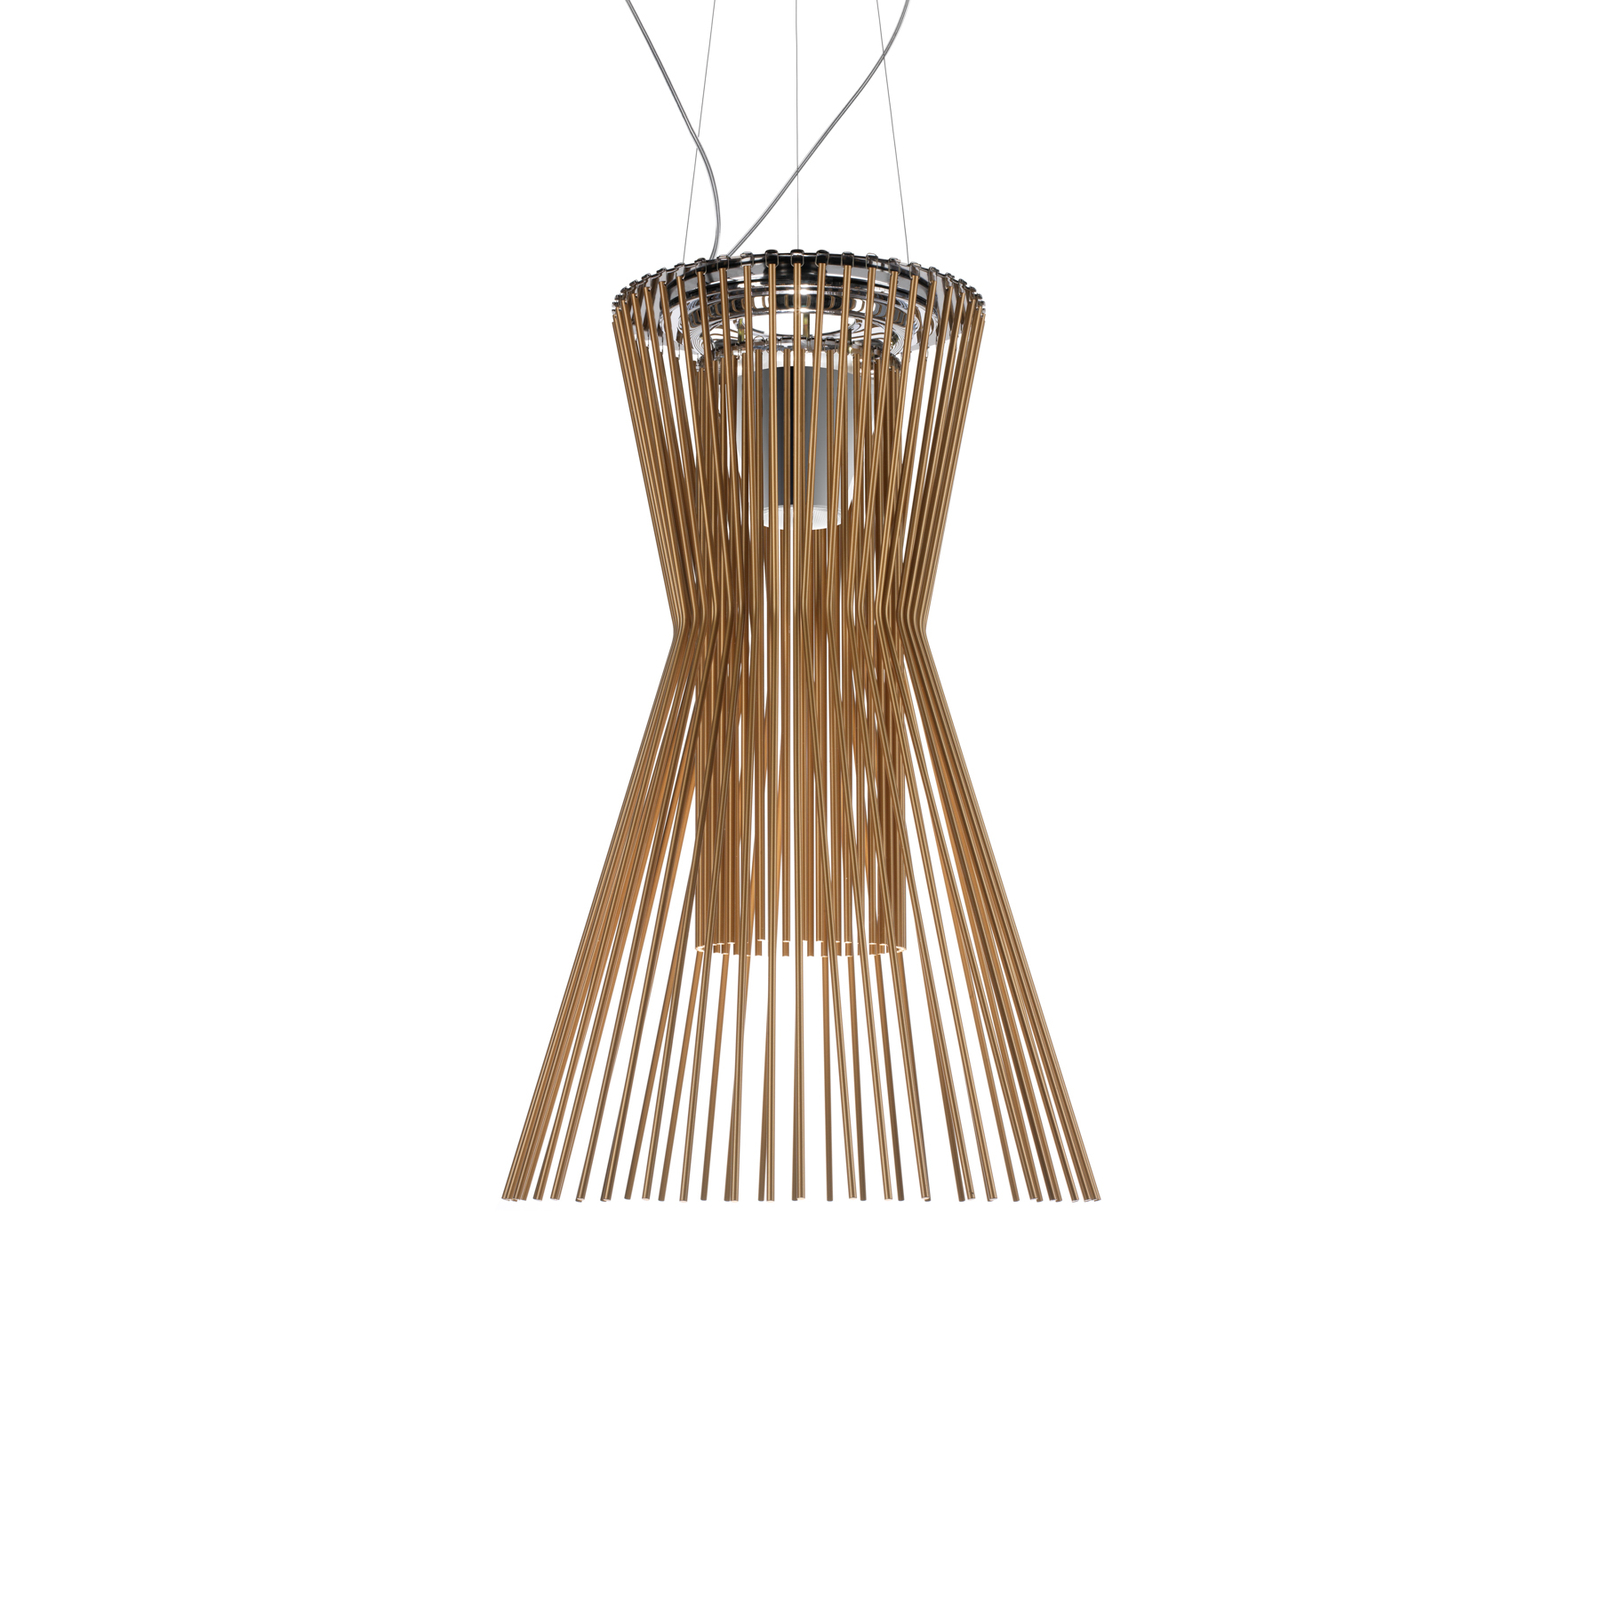 Foscarini Allegro Vivace LED pendant light, copper